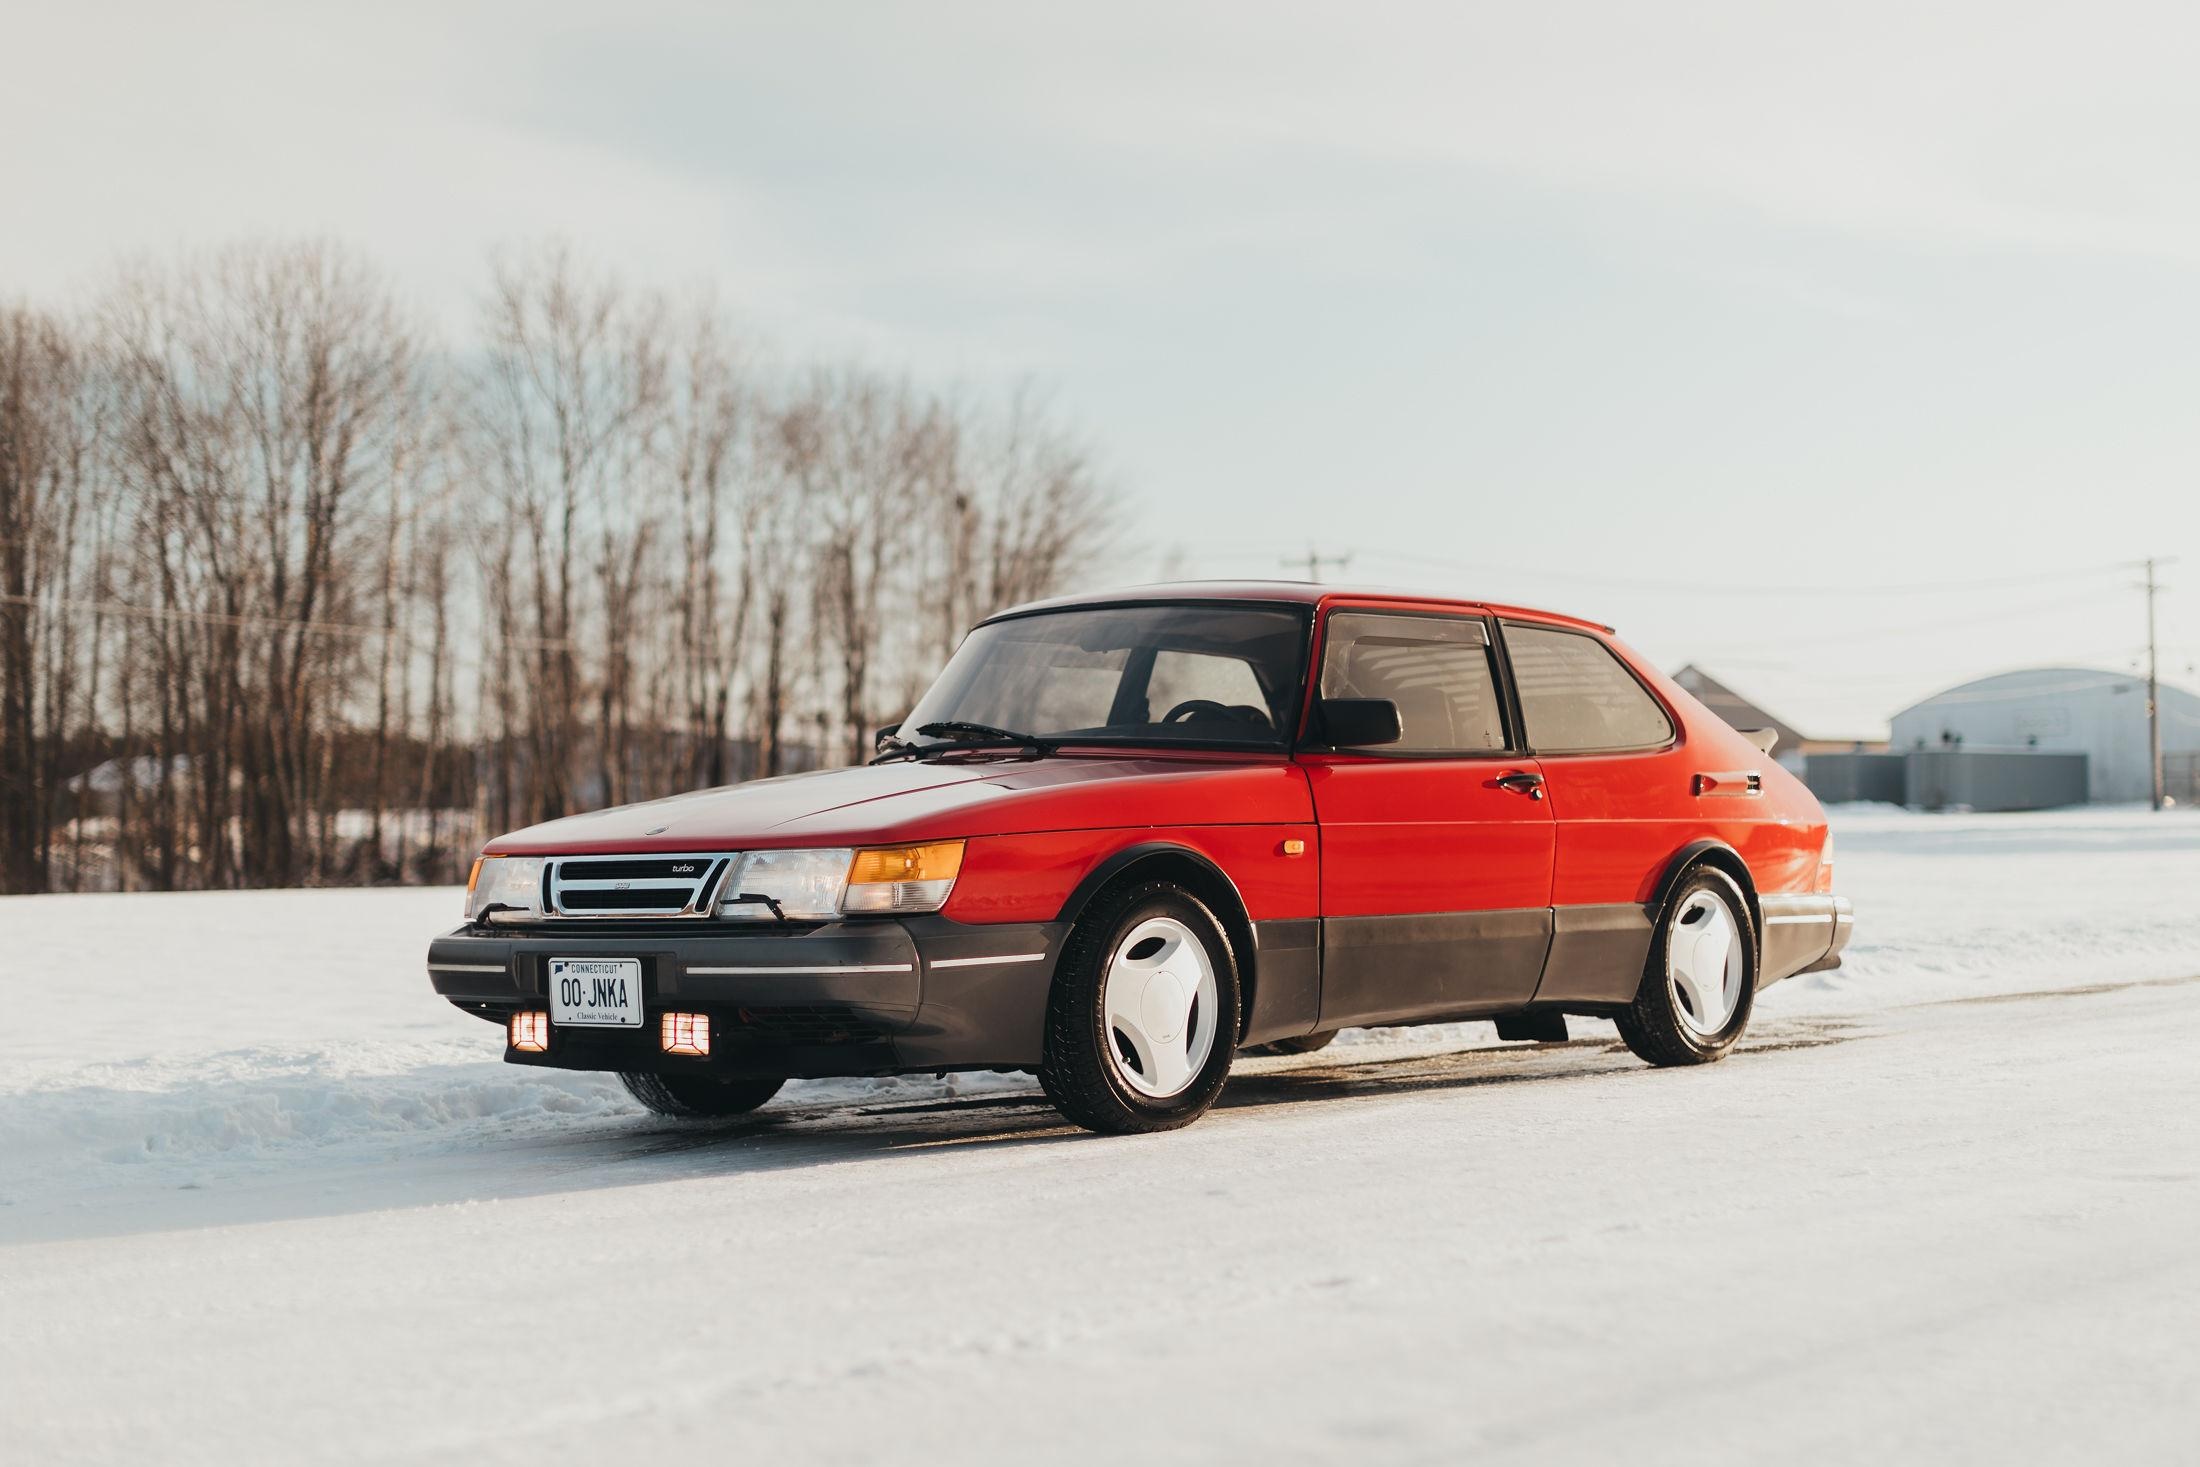 Saab 900 Turbo in the snow